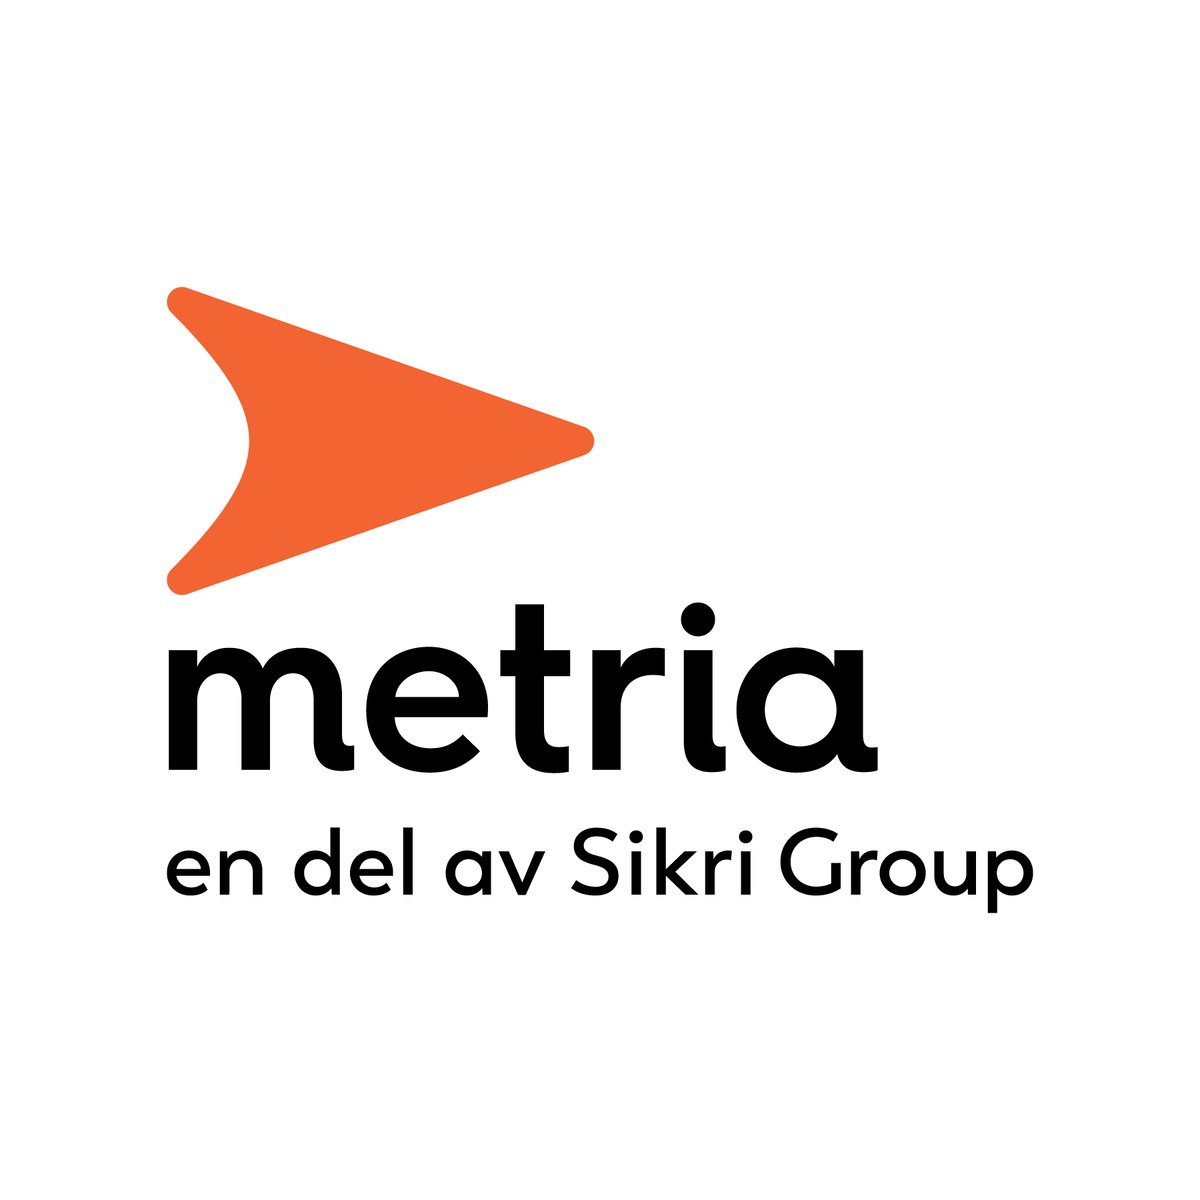 Metria en del av Sikri Group Logotyp Positiv RGB